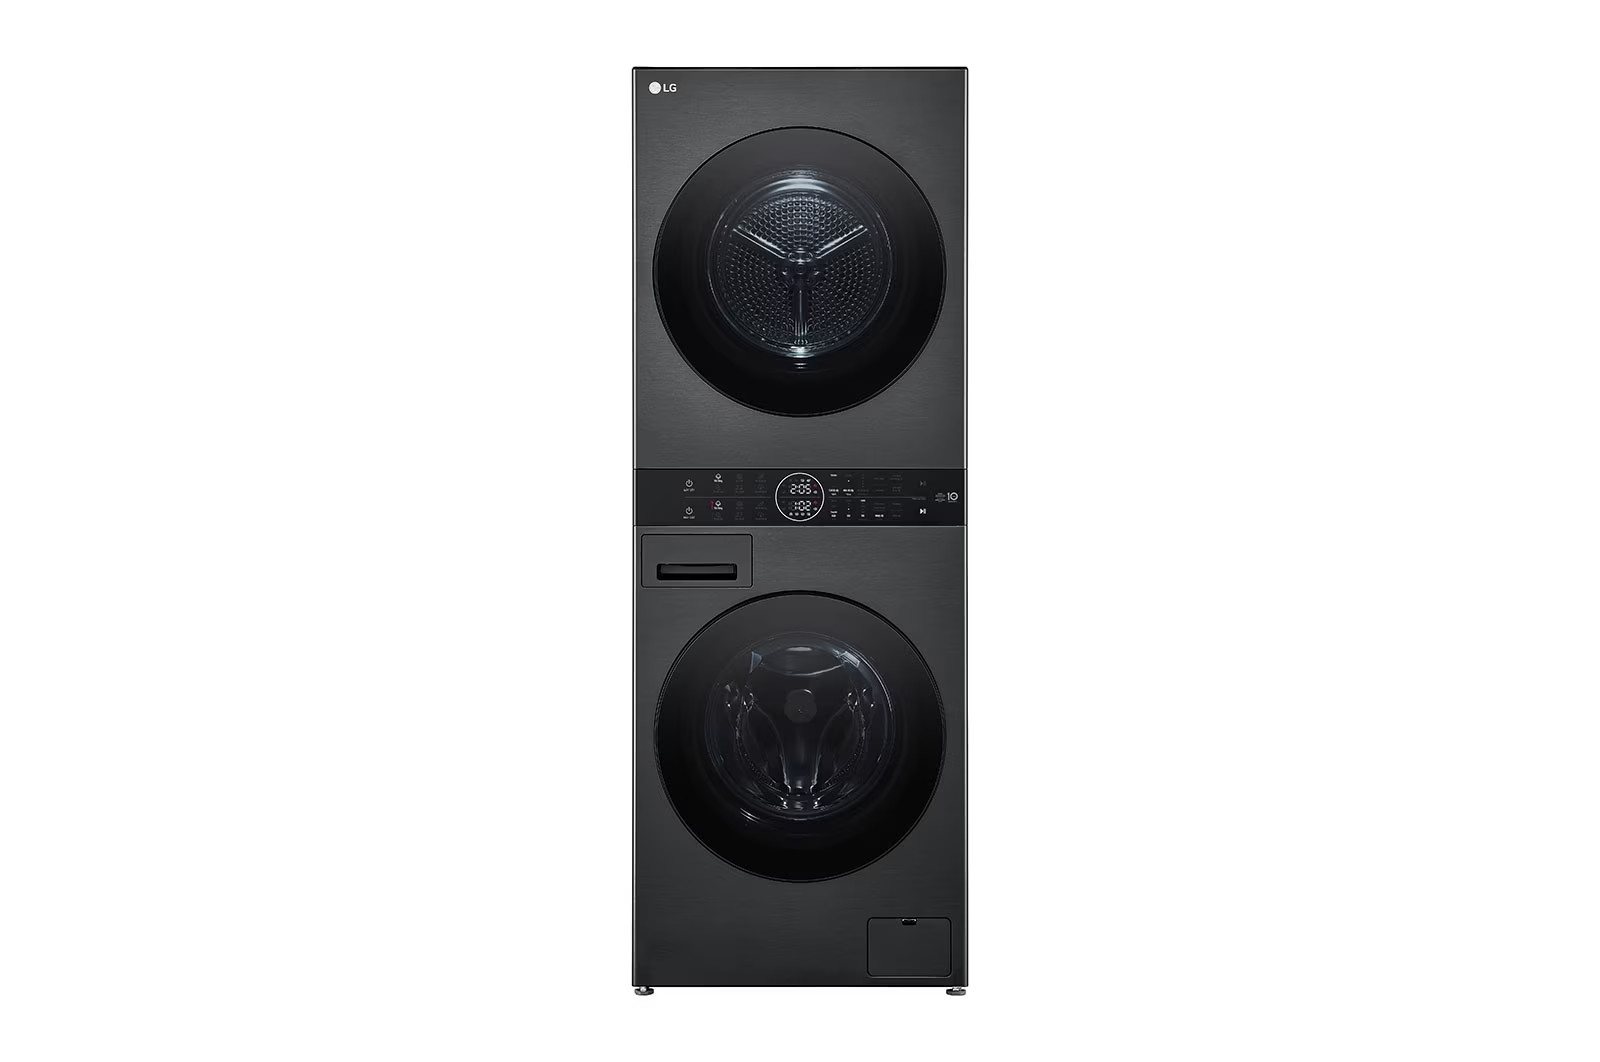 Tháp giặt sấy LG WashTower™ Giặt 14kg/ Sấy 10kg Màu đen|WT1410NHB